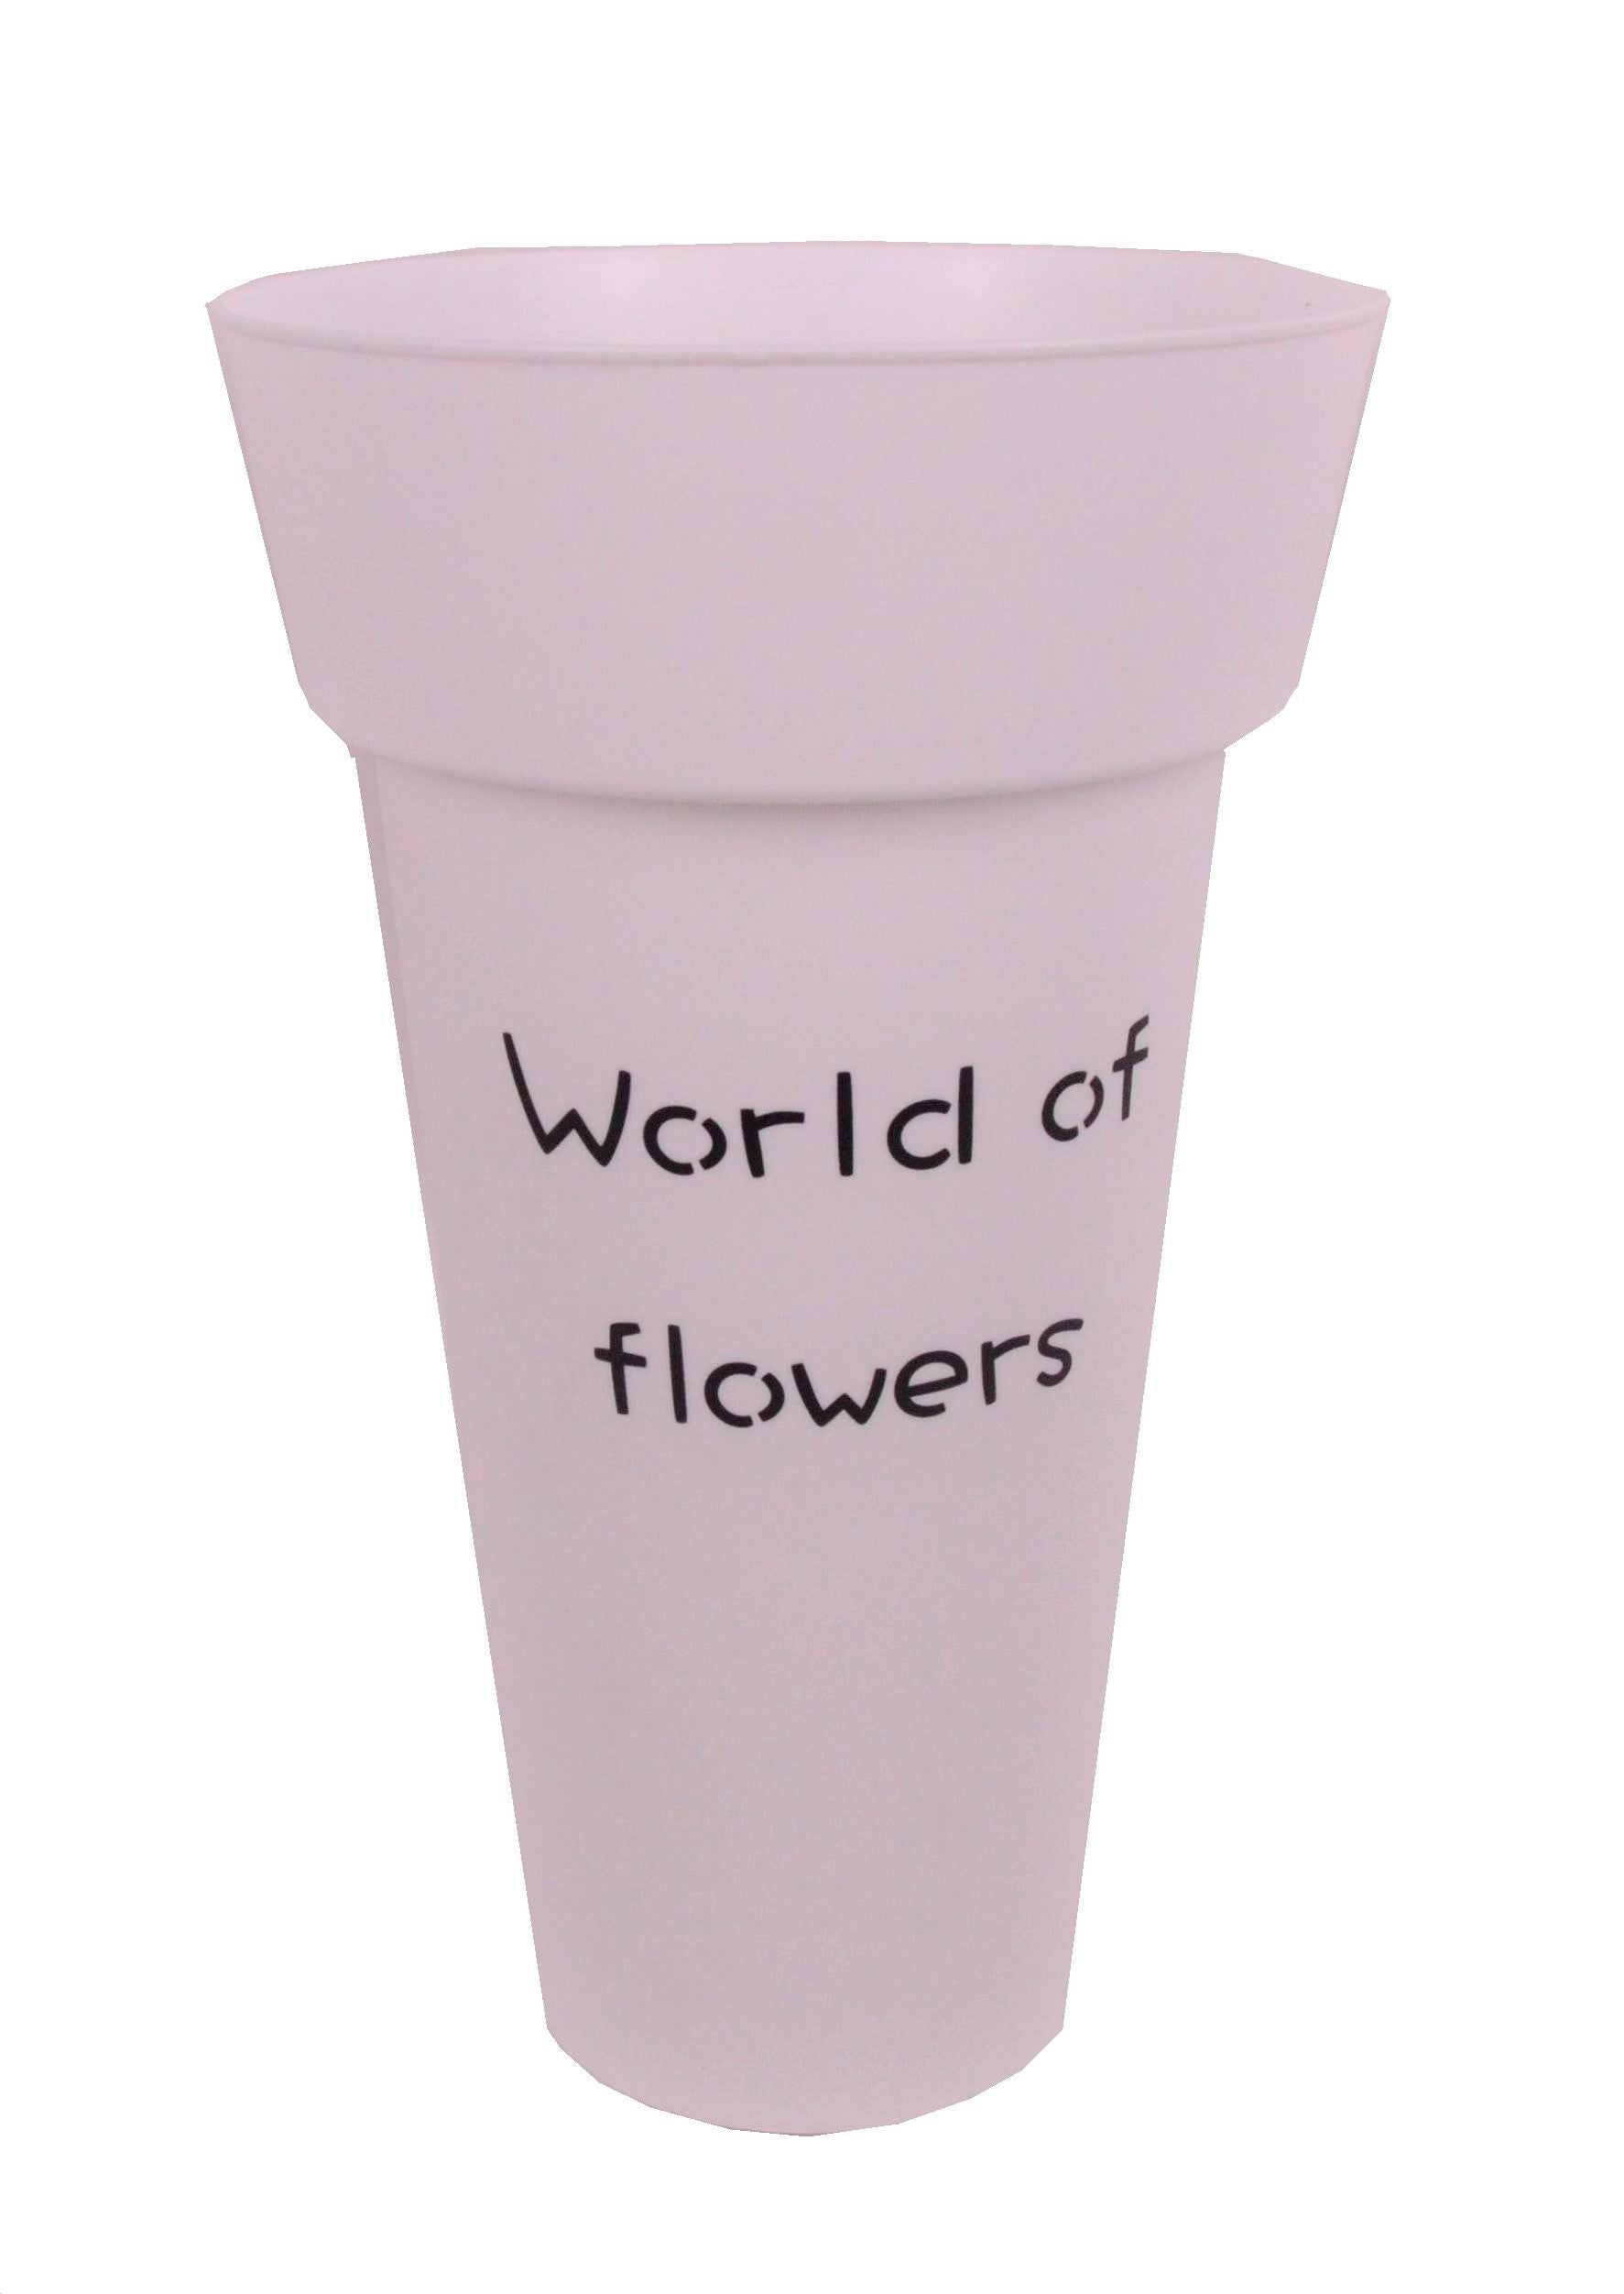 Vaza de plastic conica uni